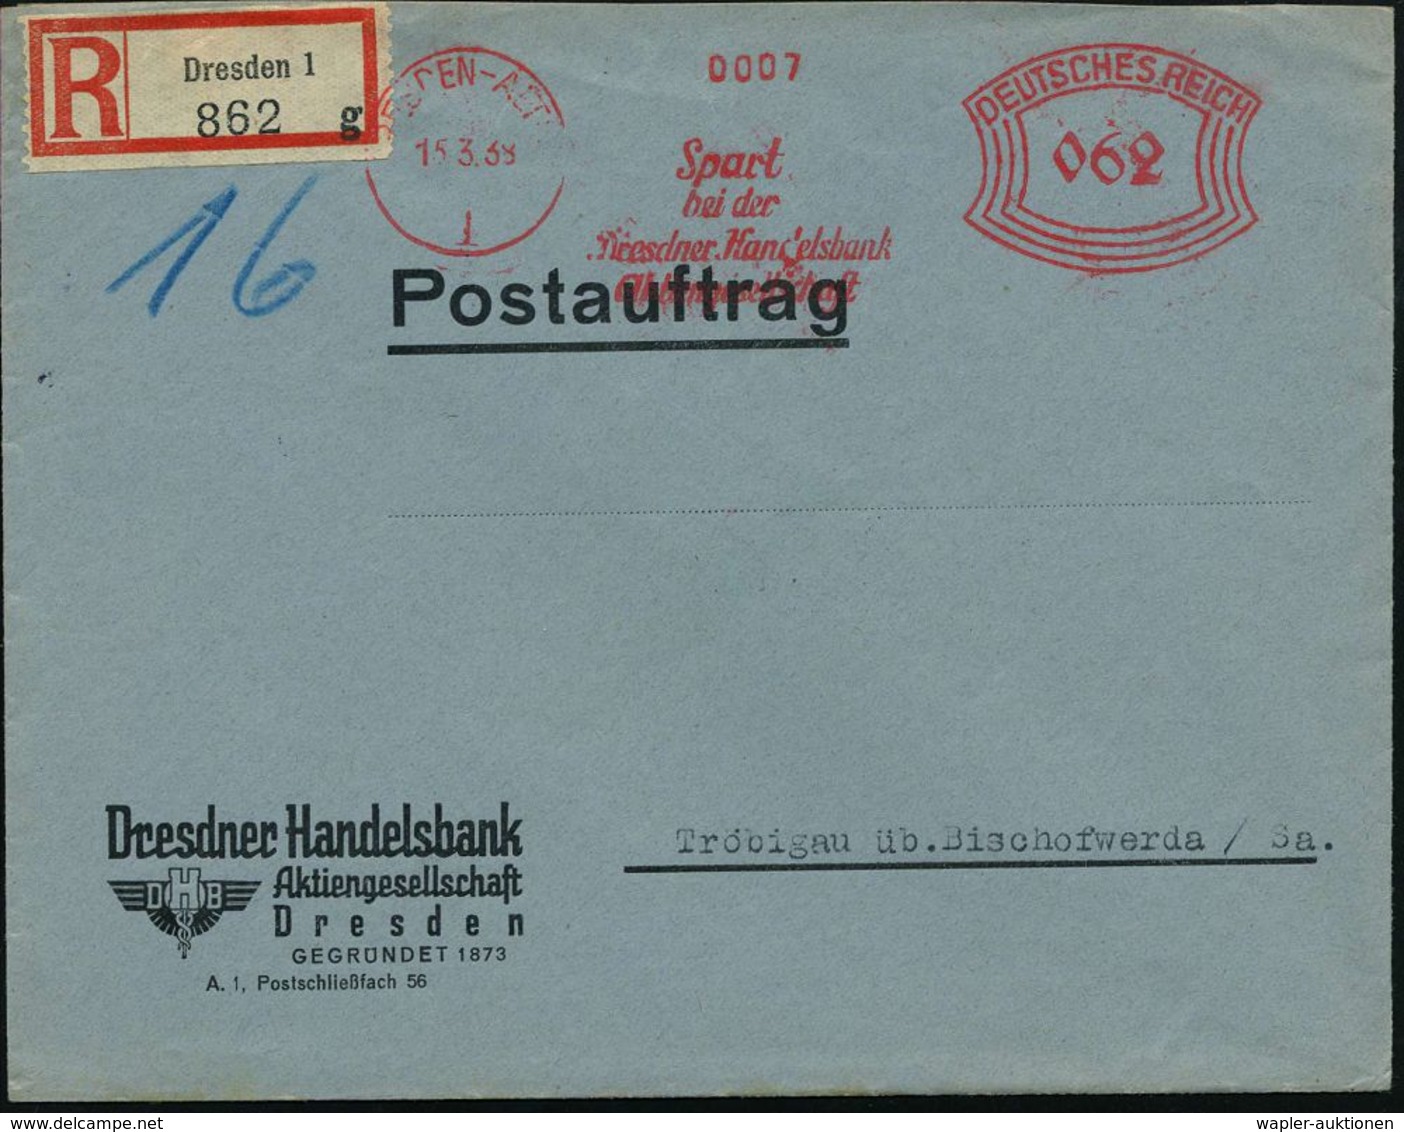 DRESDEN-ALTST/ 1/ Spart/ Bei Der/ Dresdner Handelsbank/ AG 1939 (15.3.) AFS 062 Pf. + RZ: Dresden 1/g, Firmen-Bf.: DHB,  - Zonder Classificatie